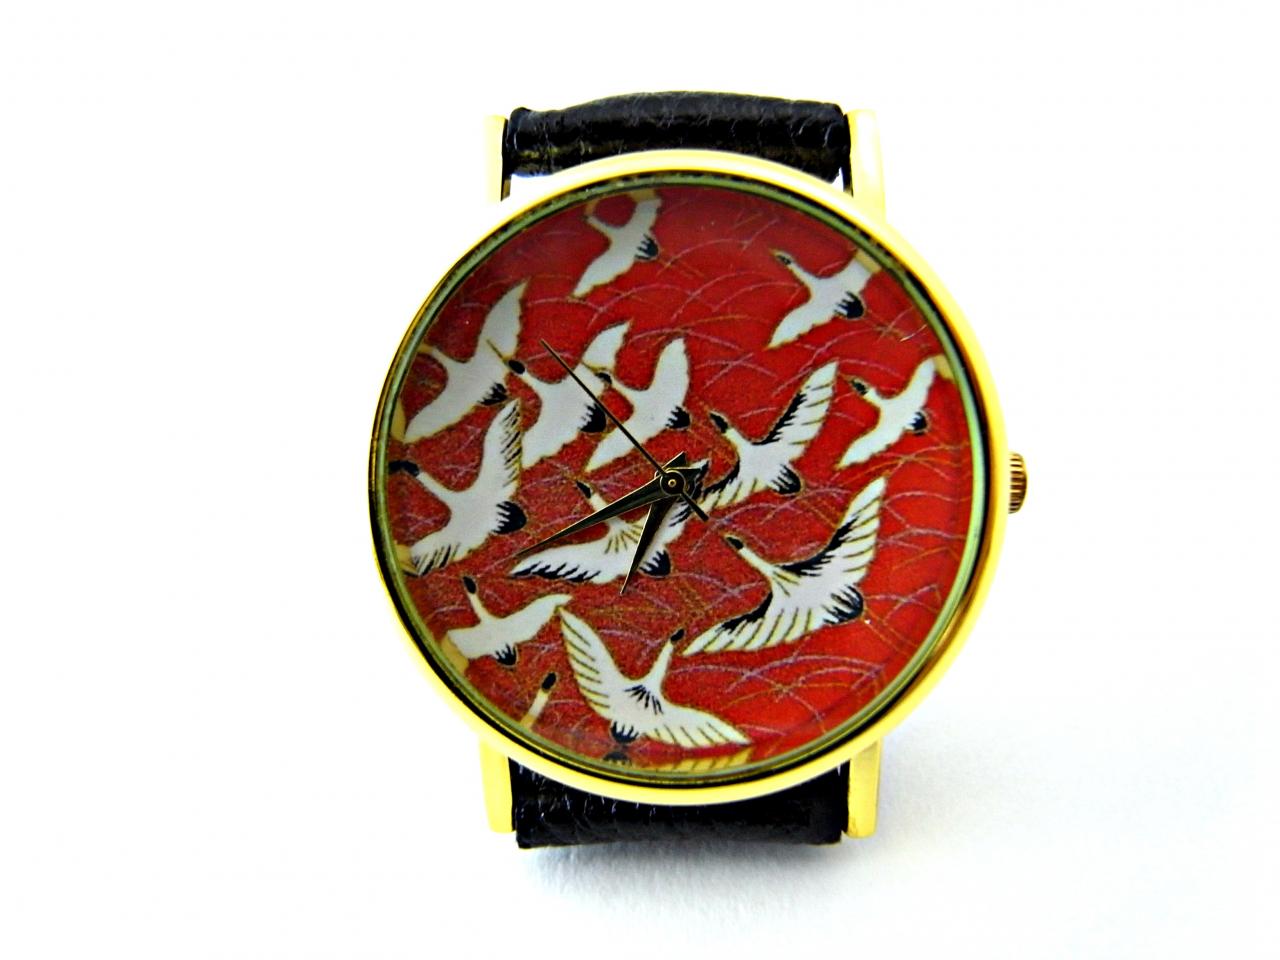 Snow Geese Leather Wrist Watch, Japanese Art Watch, Woman Man Lady Unisex Watch, Genuine Leather Handmade Unique Watch #78